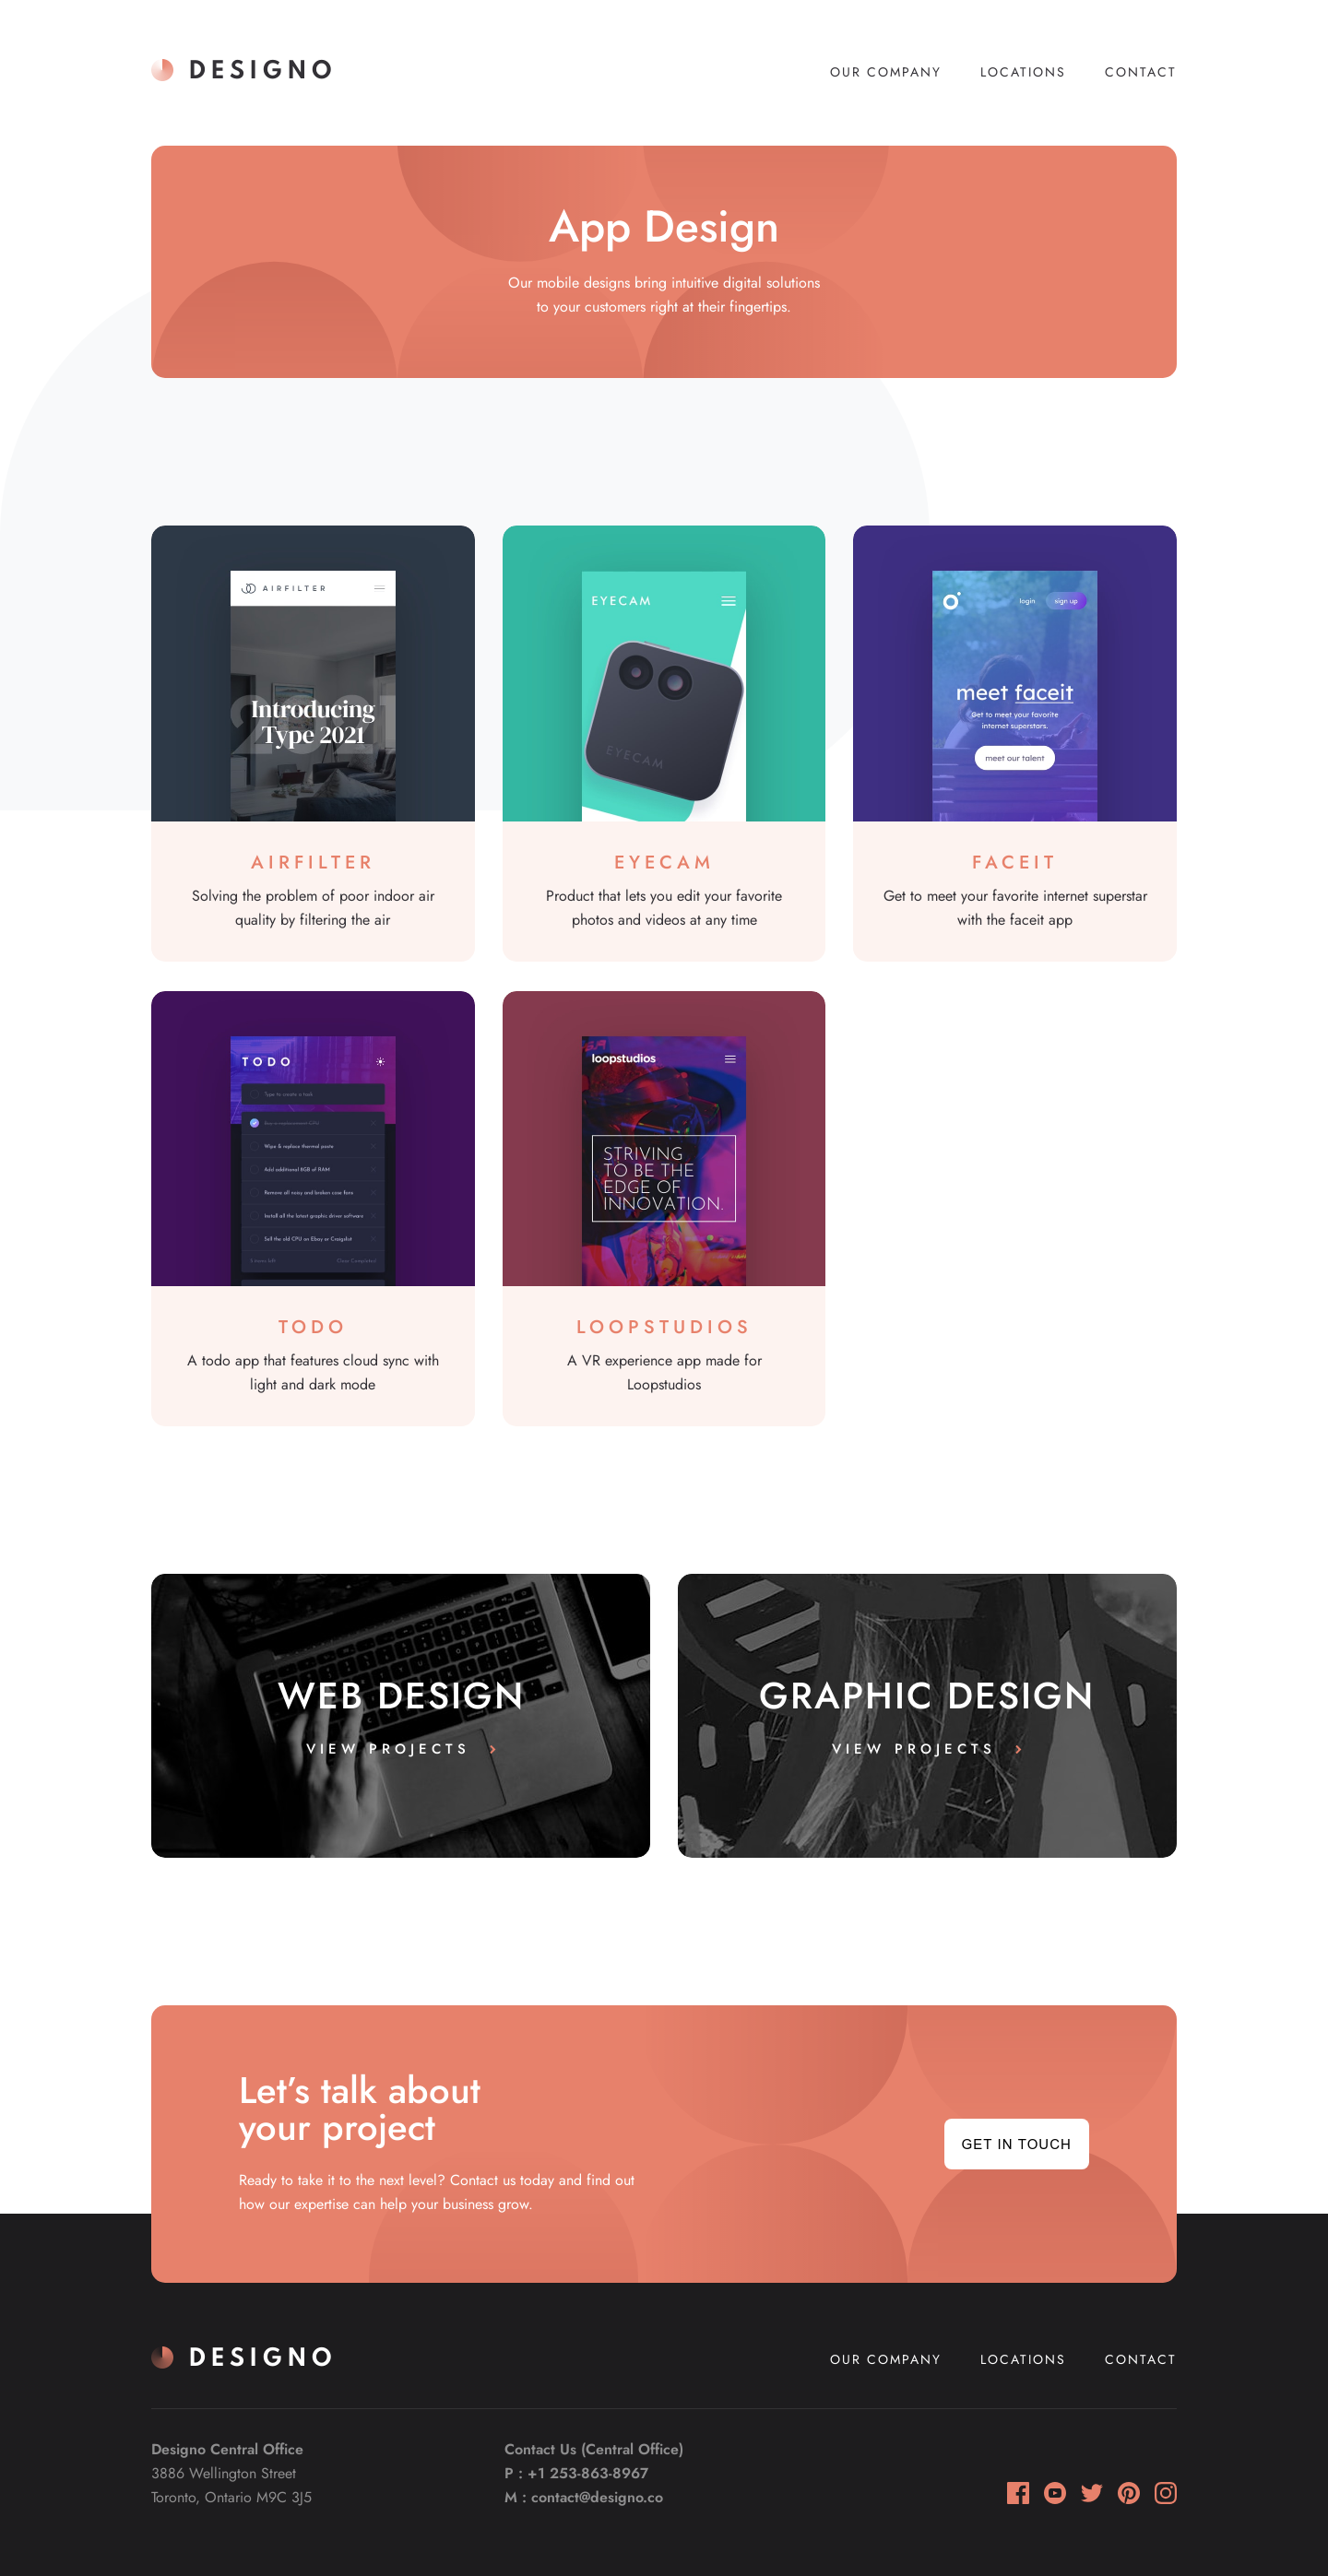 Desktop – App Design page